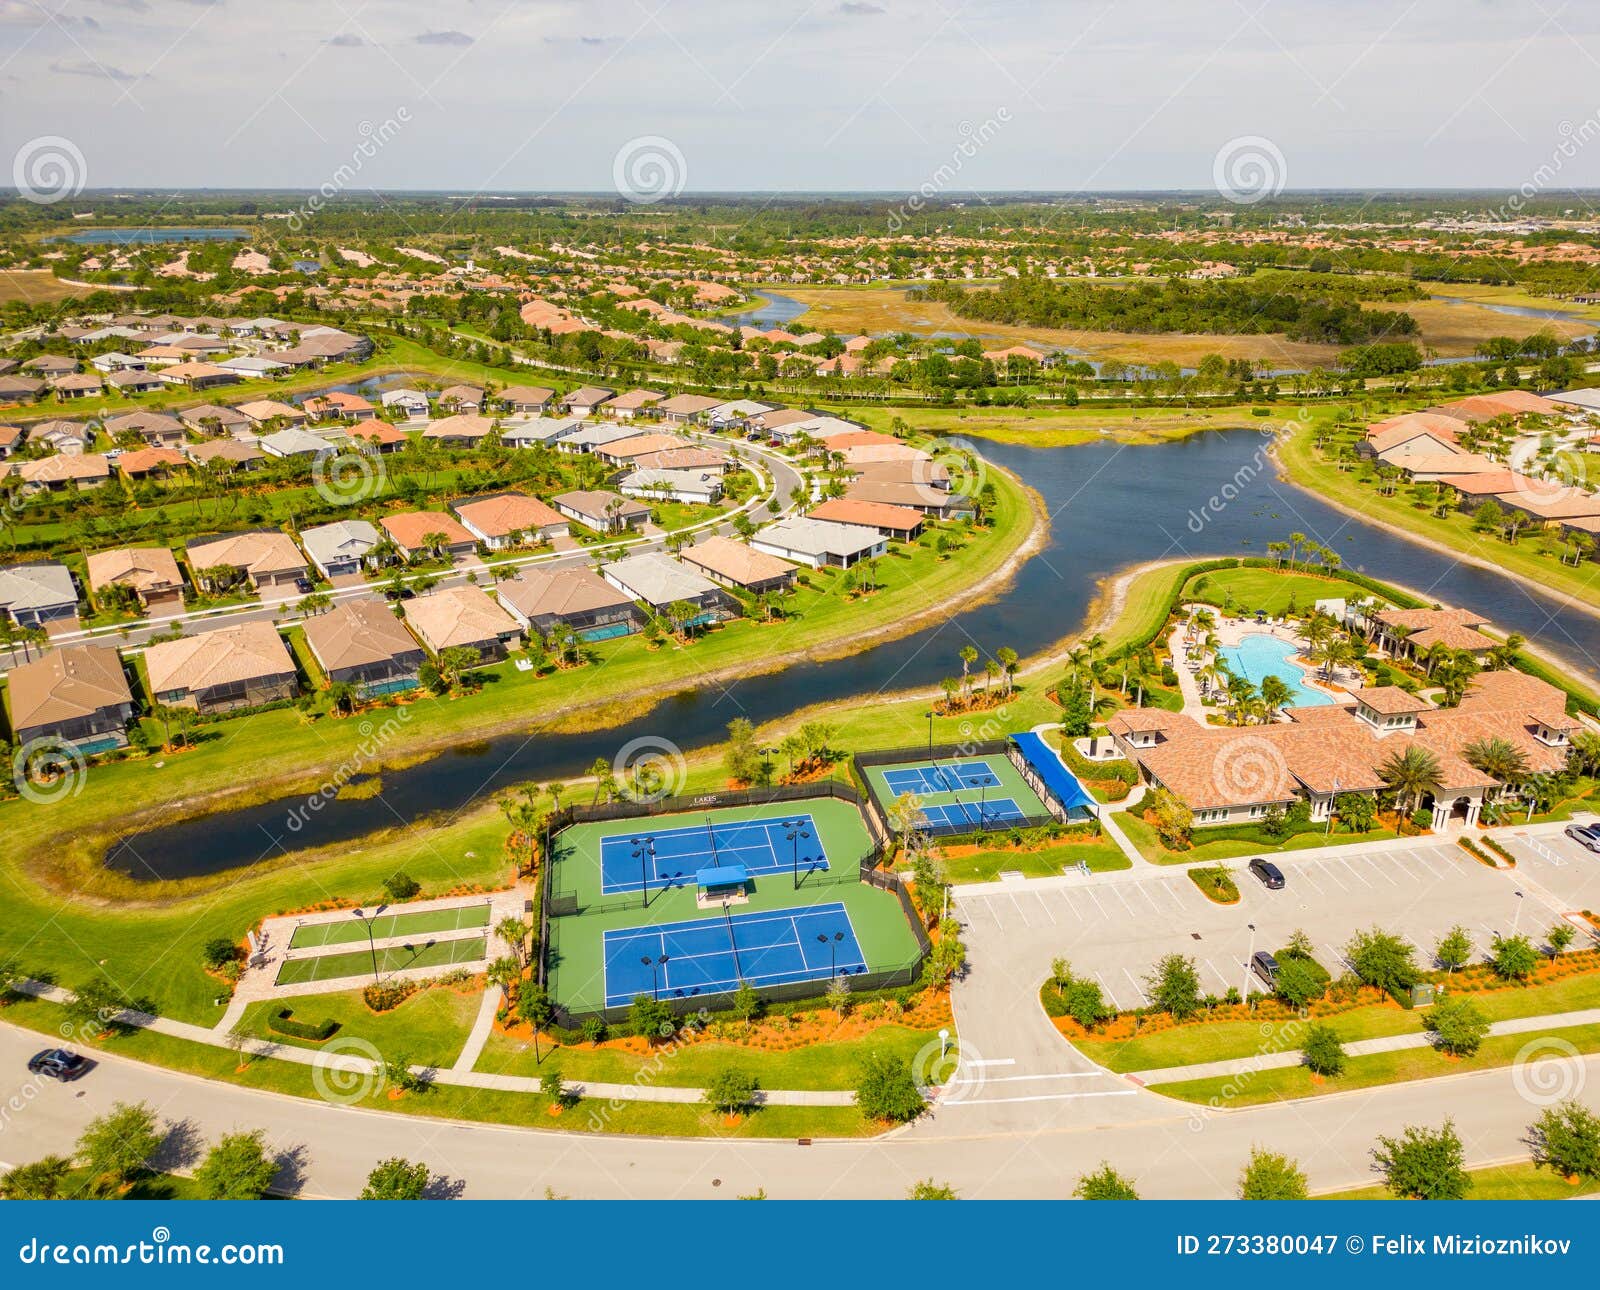 aerial photo neighborhoods in vero beach florida usa with amenities